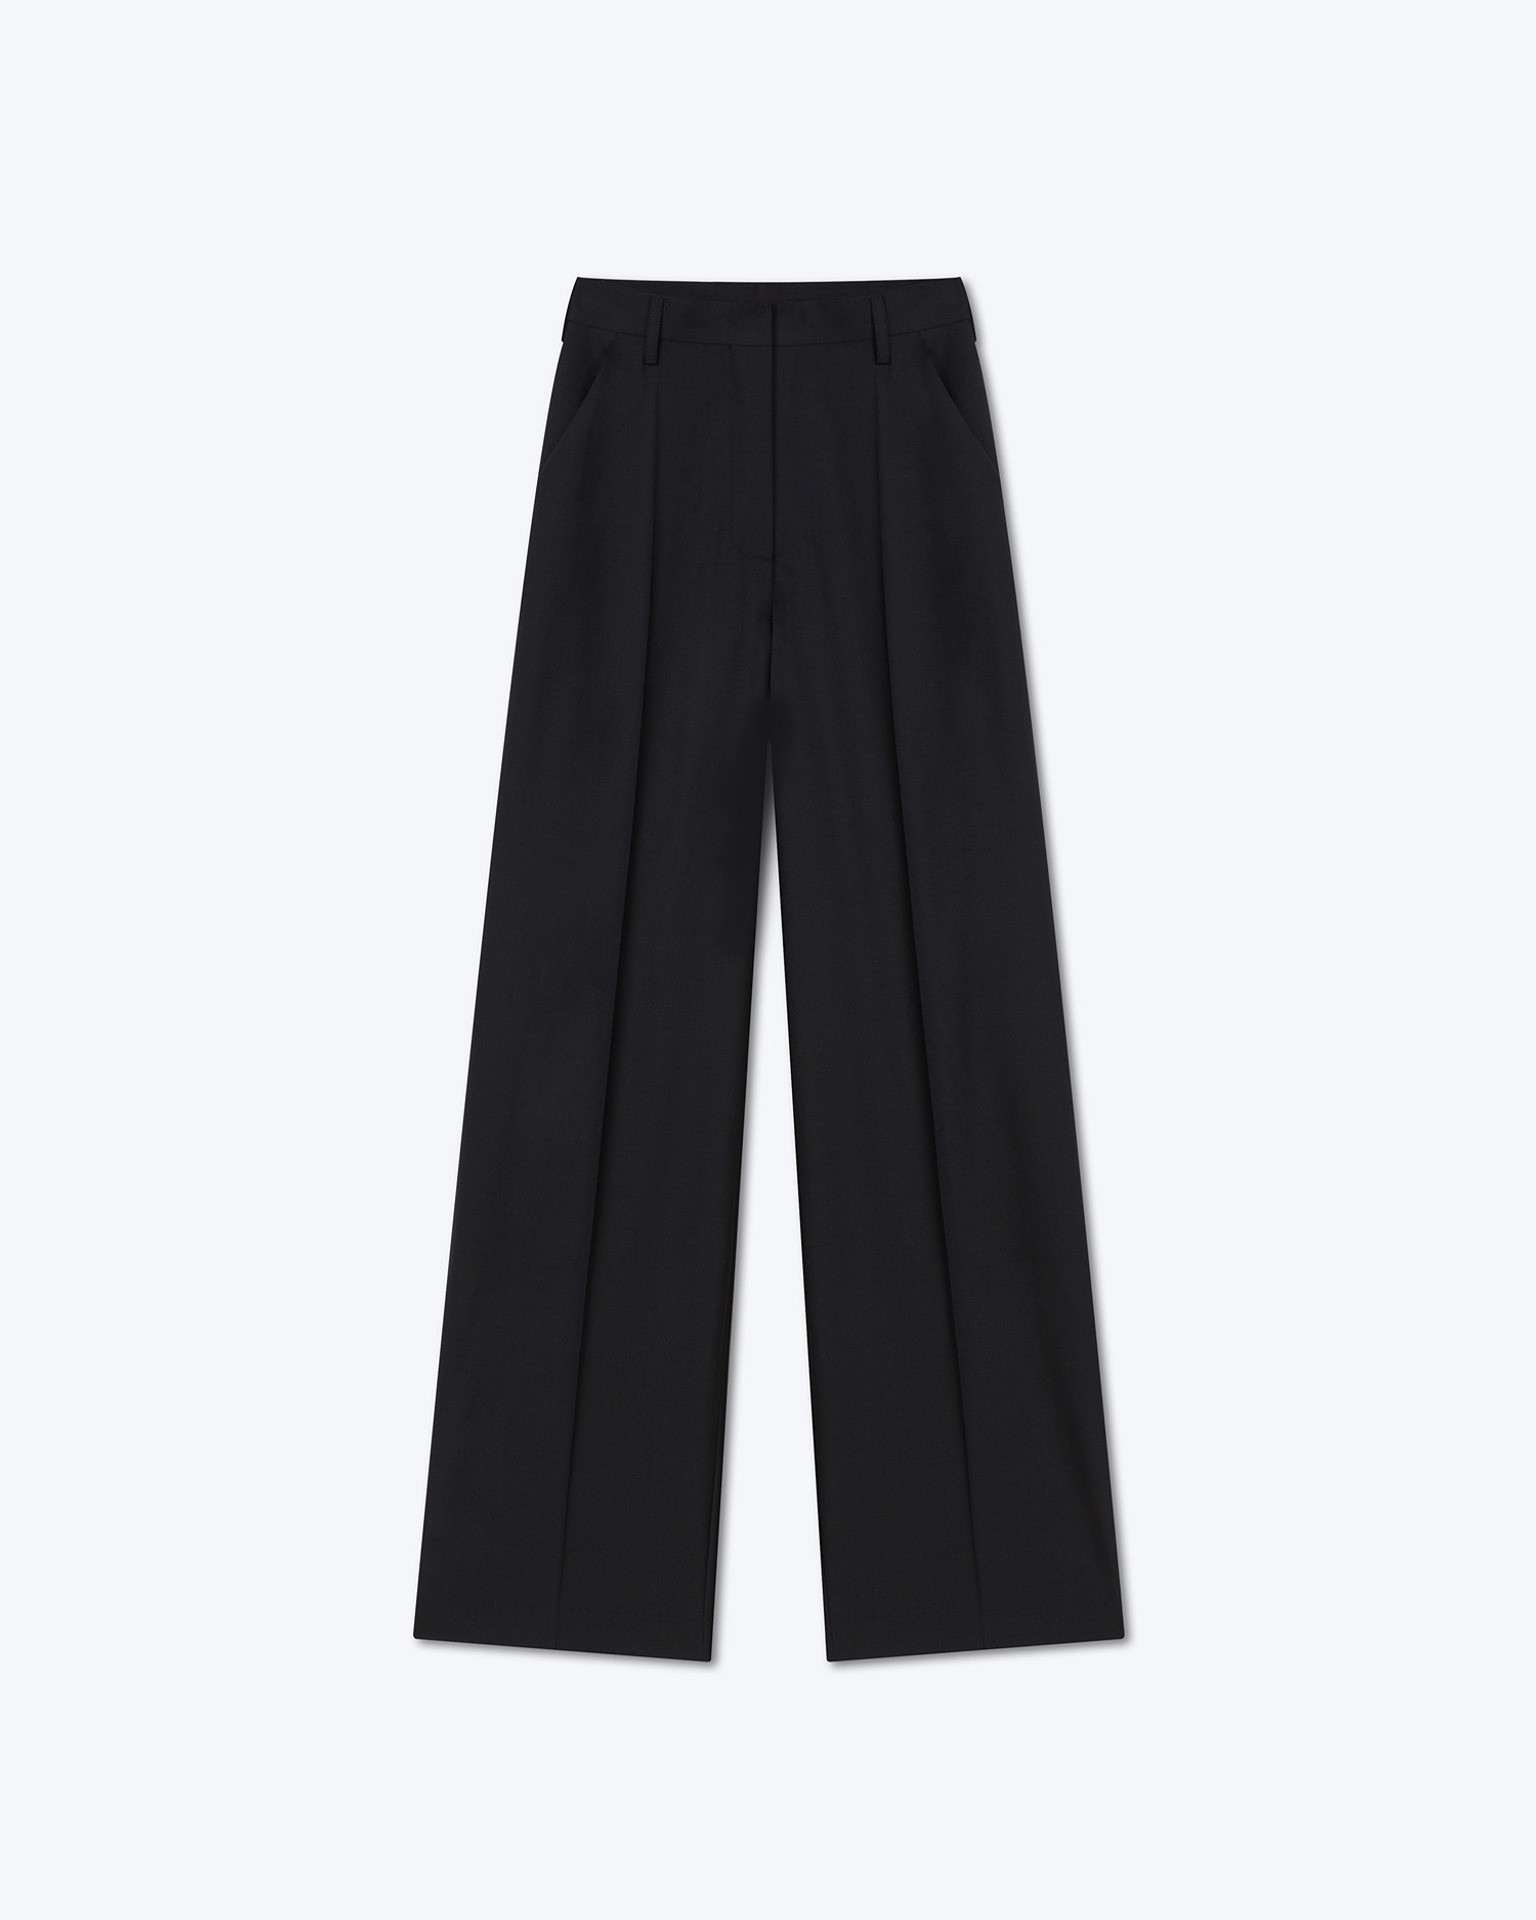 ELAINA - Summer suiting wide-leg trousers - Black - 1